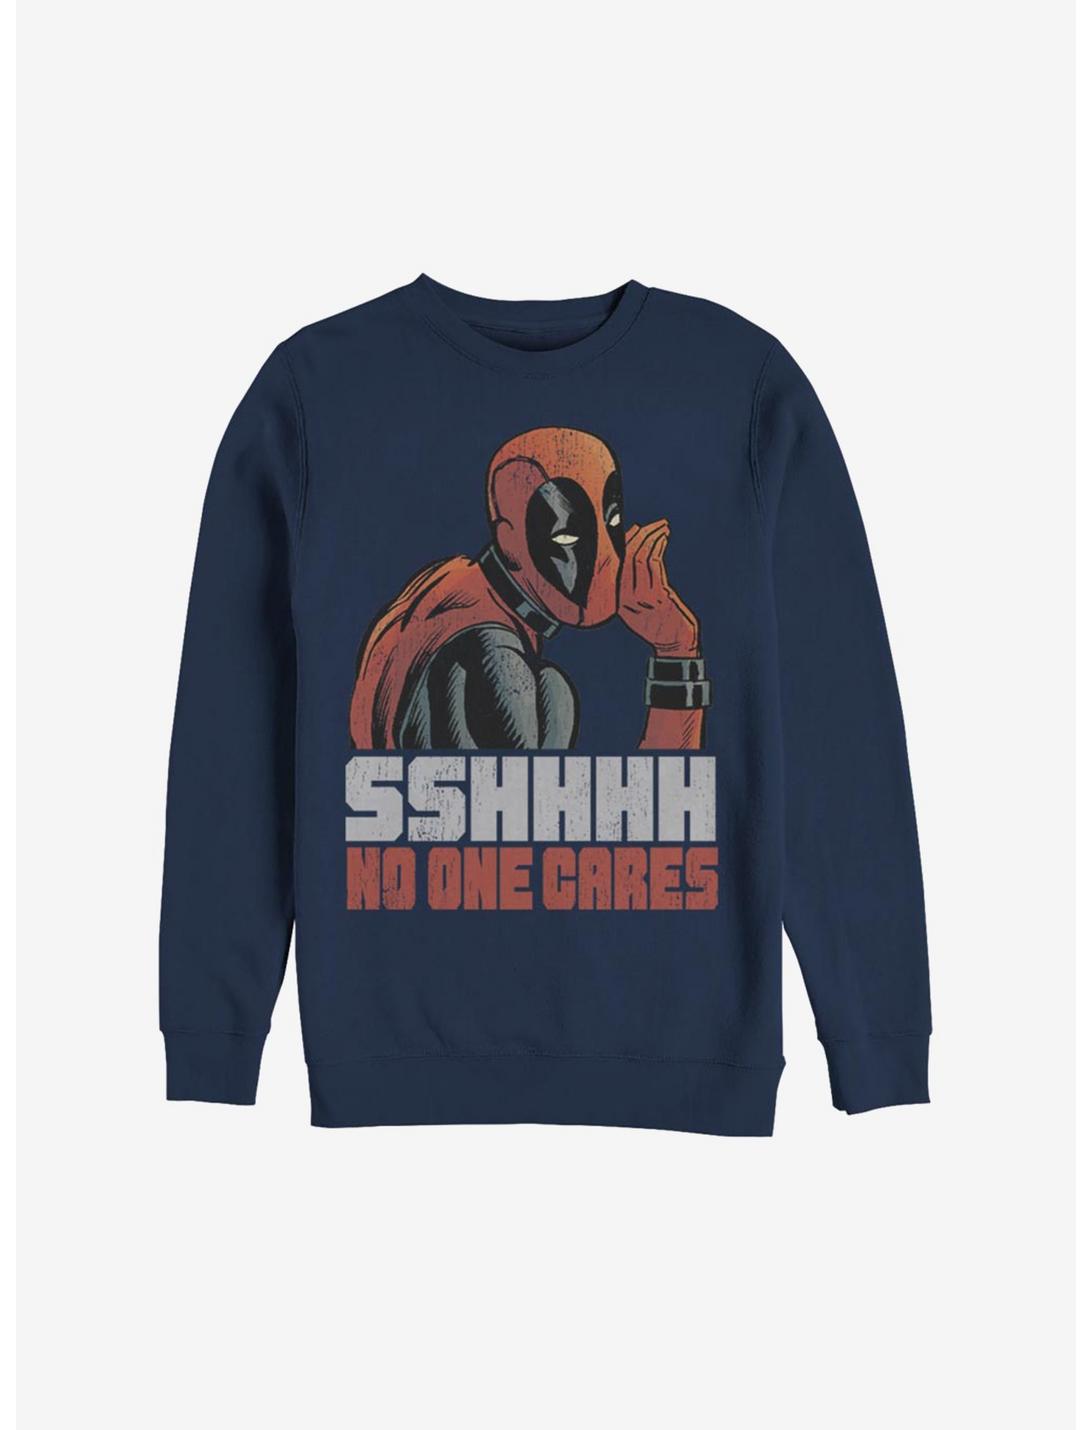 Marvel Deadpool No One Cares Sweatshirt, NAVY, hi-res